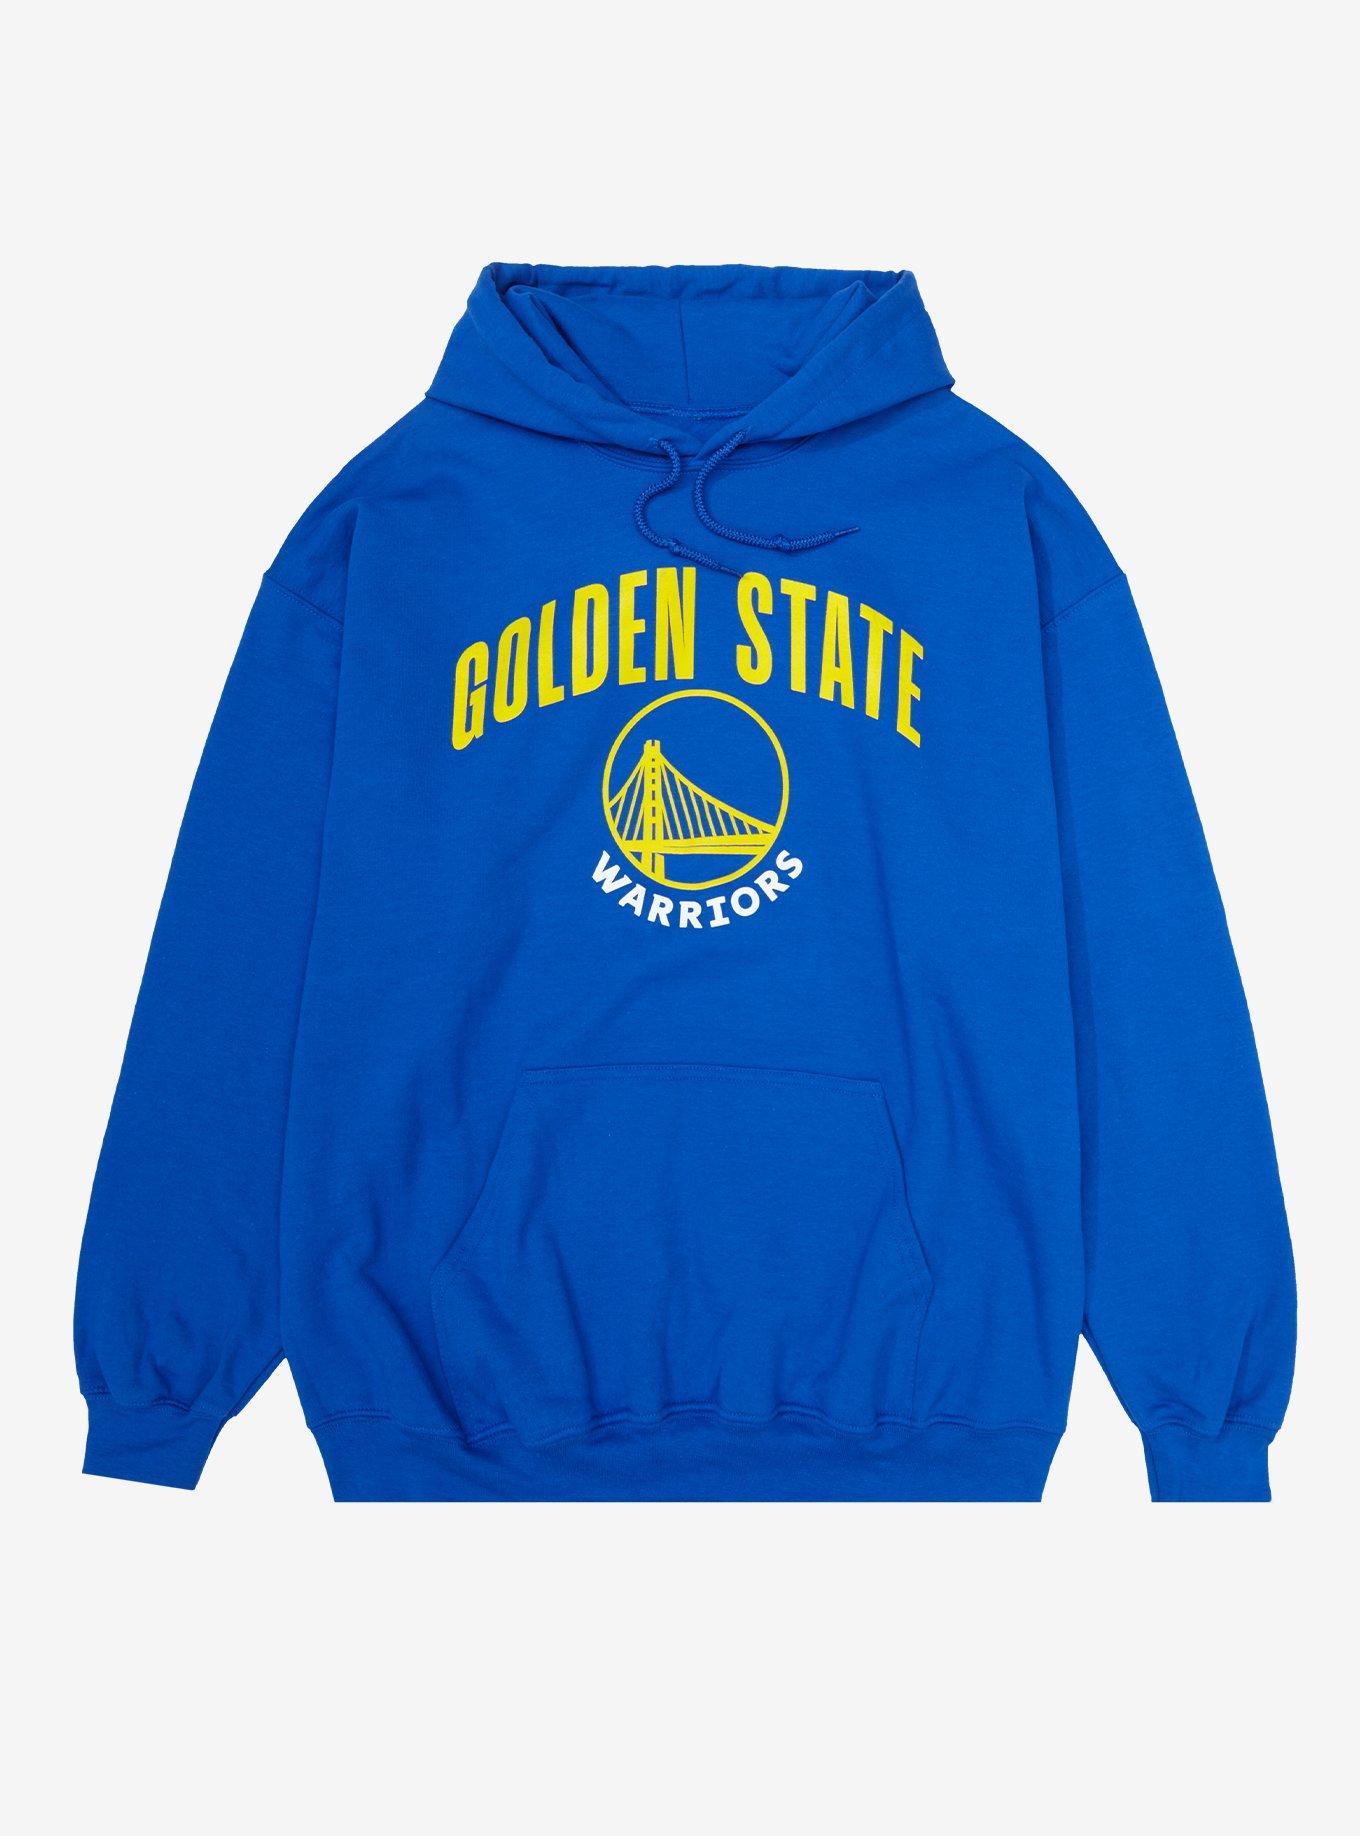 Brand New Official NBA Golden State Warriors Hoodie Women's Size M